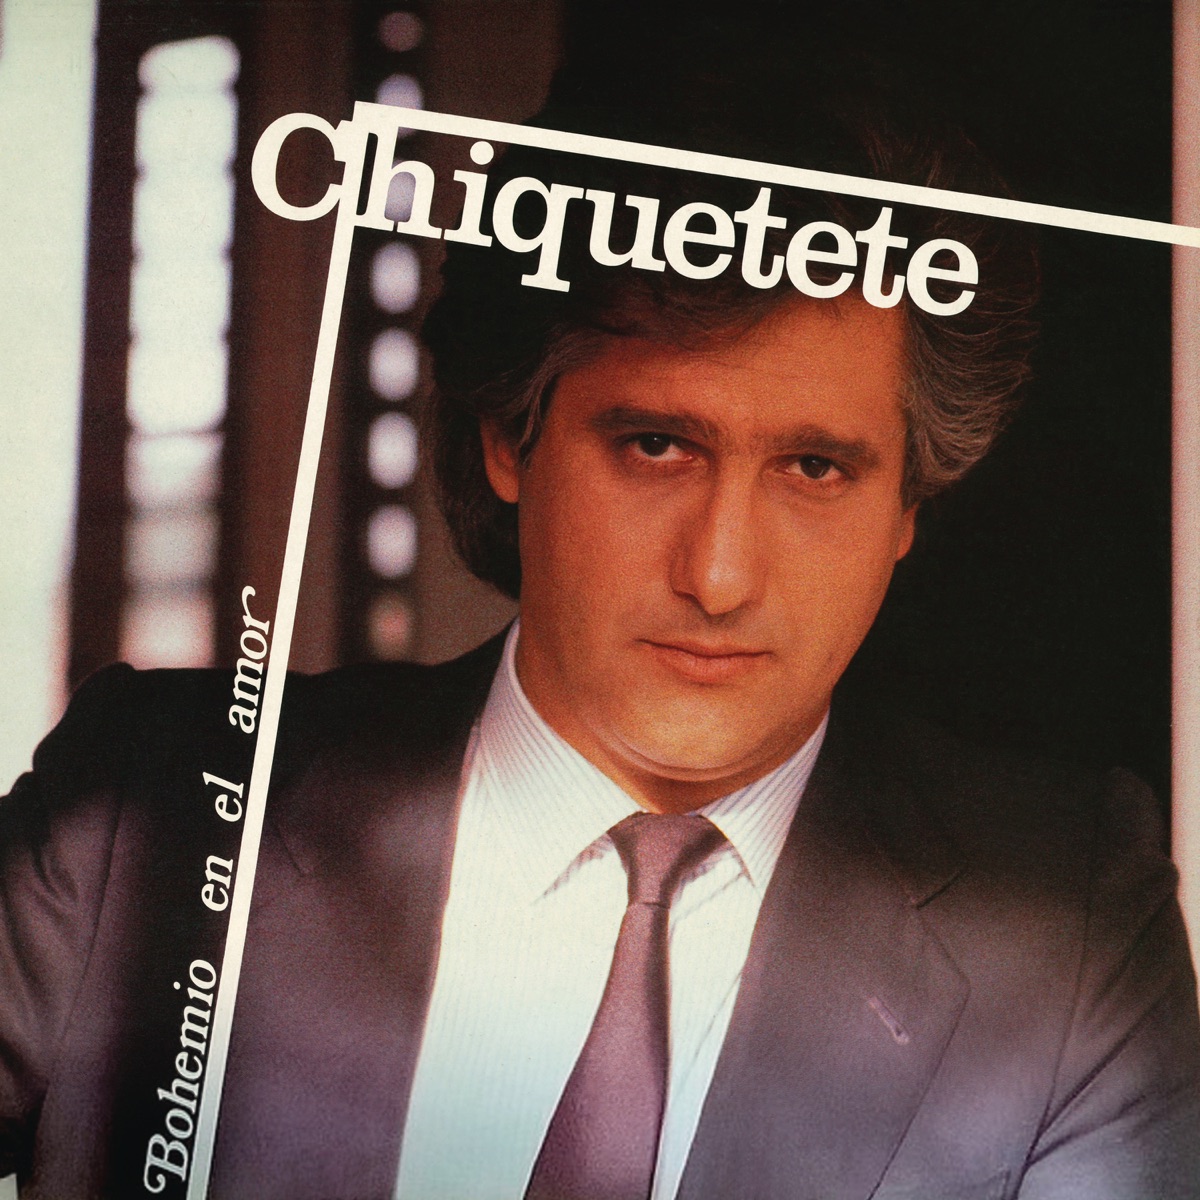 Chiquetete: Grandes Canciones by Chiquetete on Apple Music